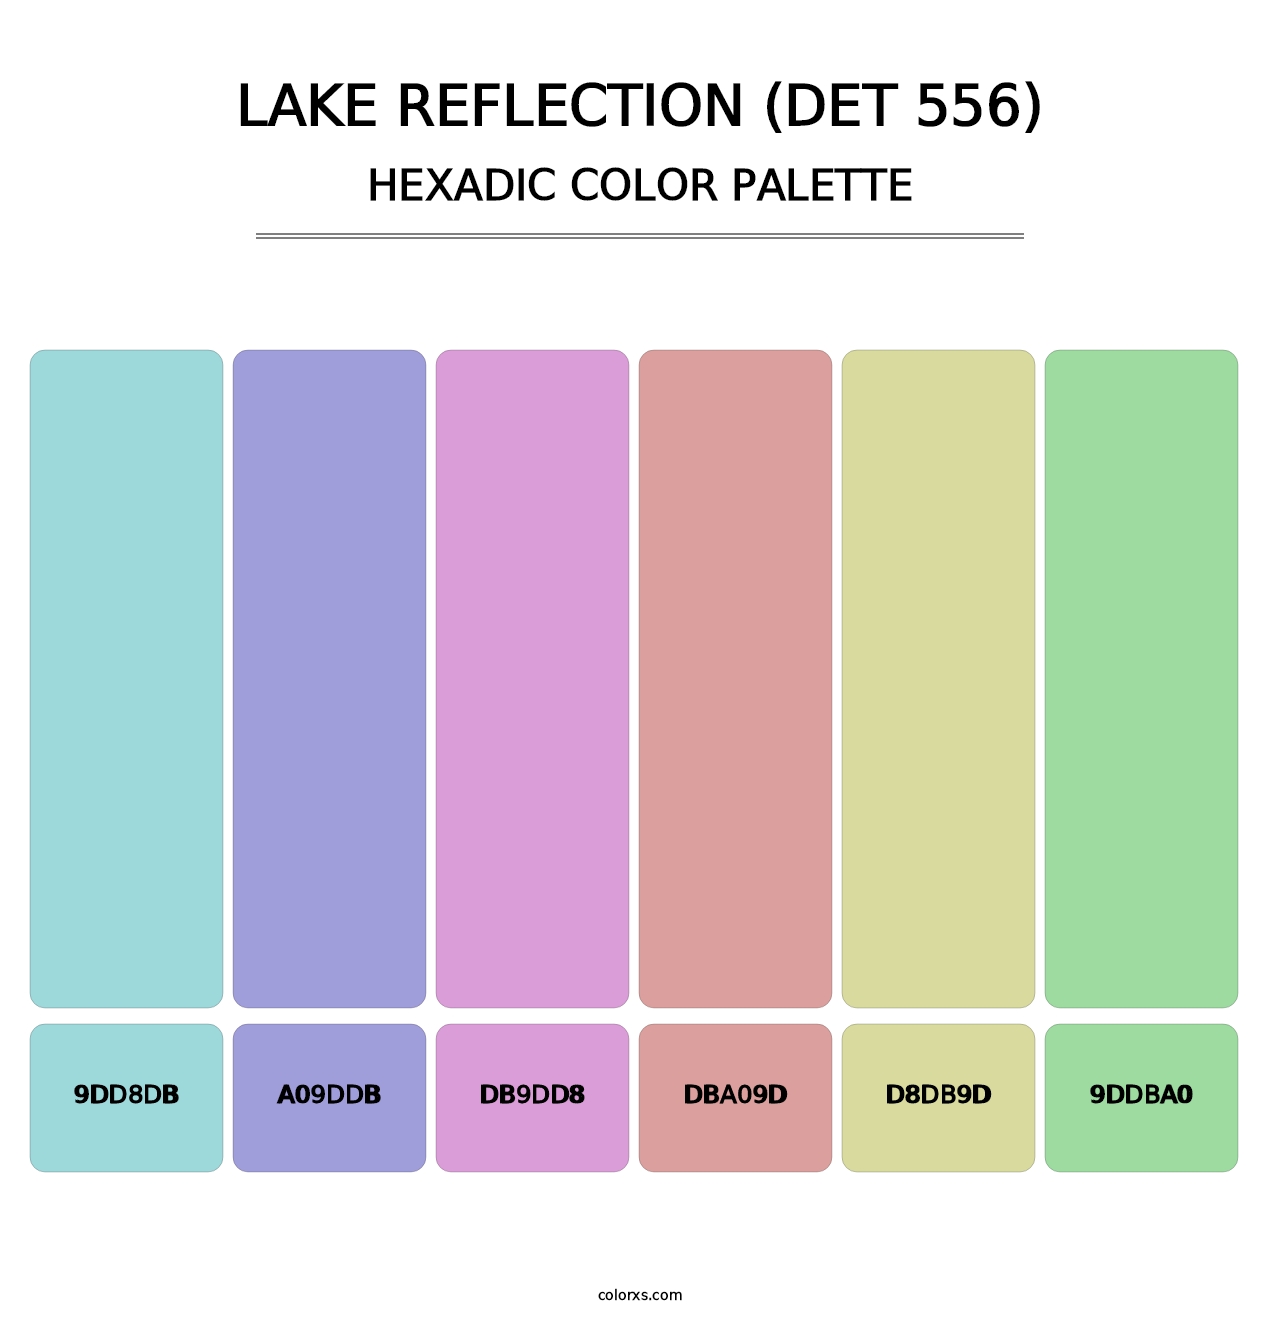 Lake Reflection (DET 556) - Hexadic Color Palette